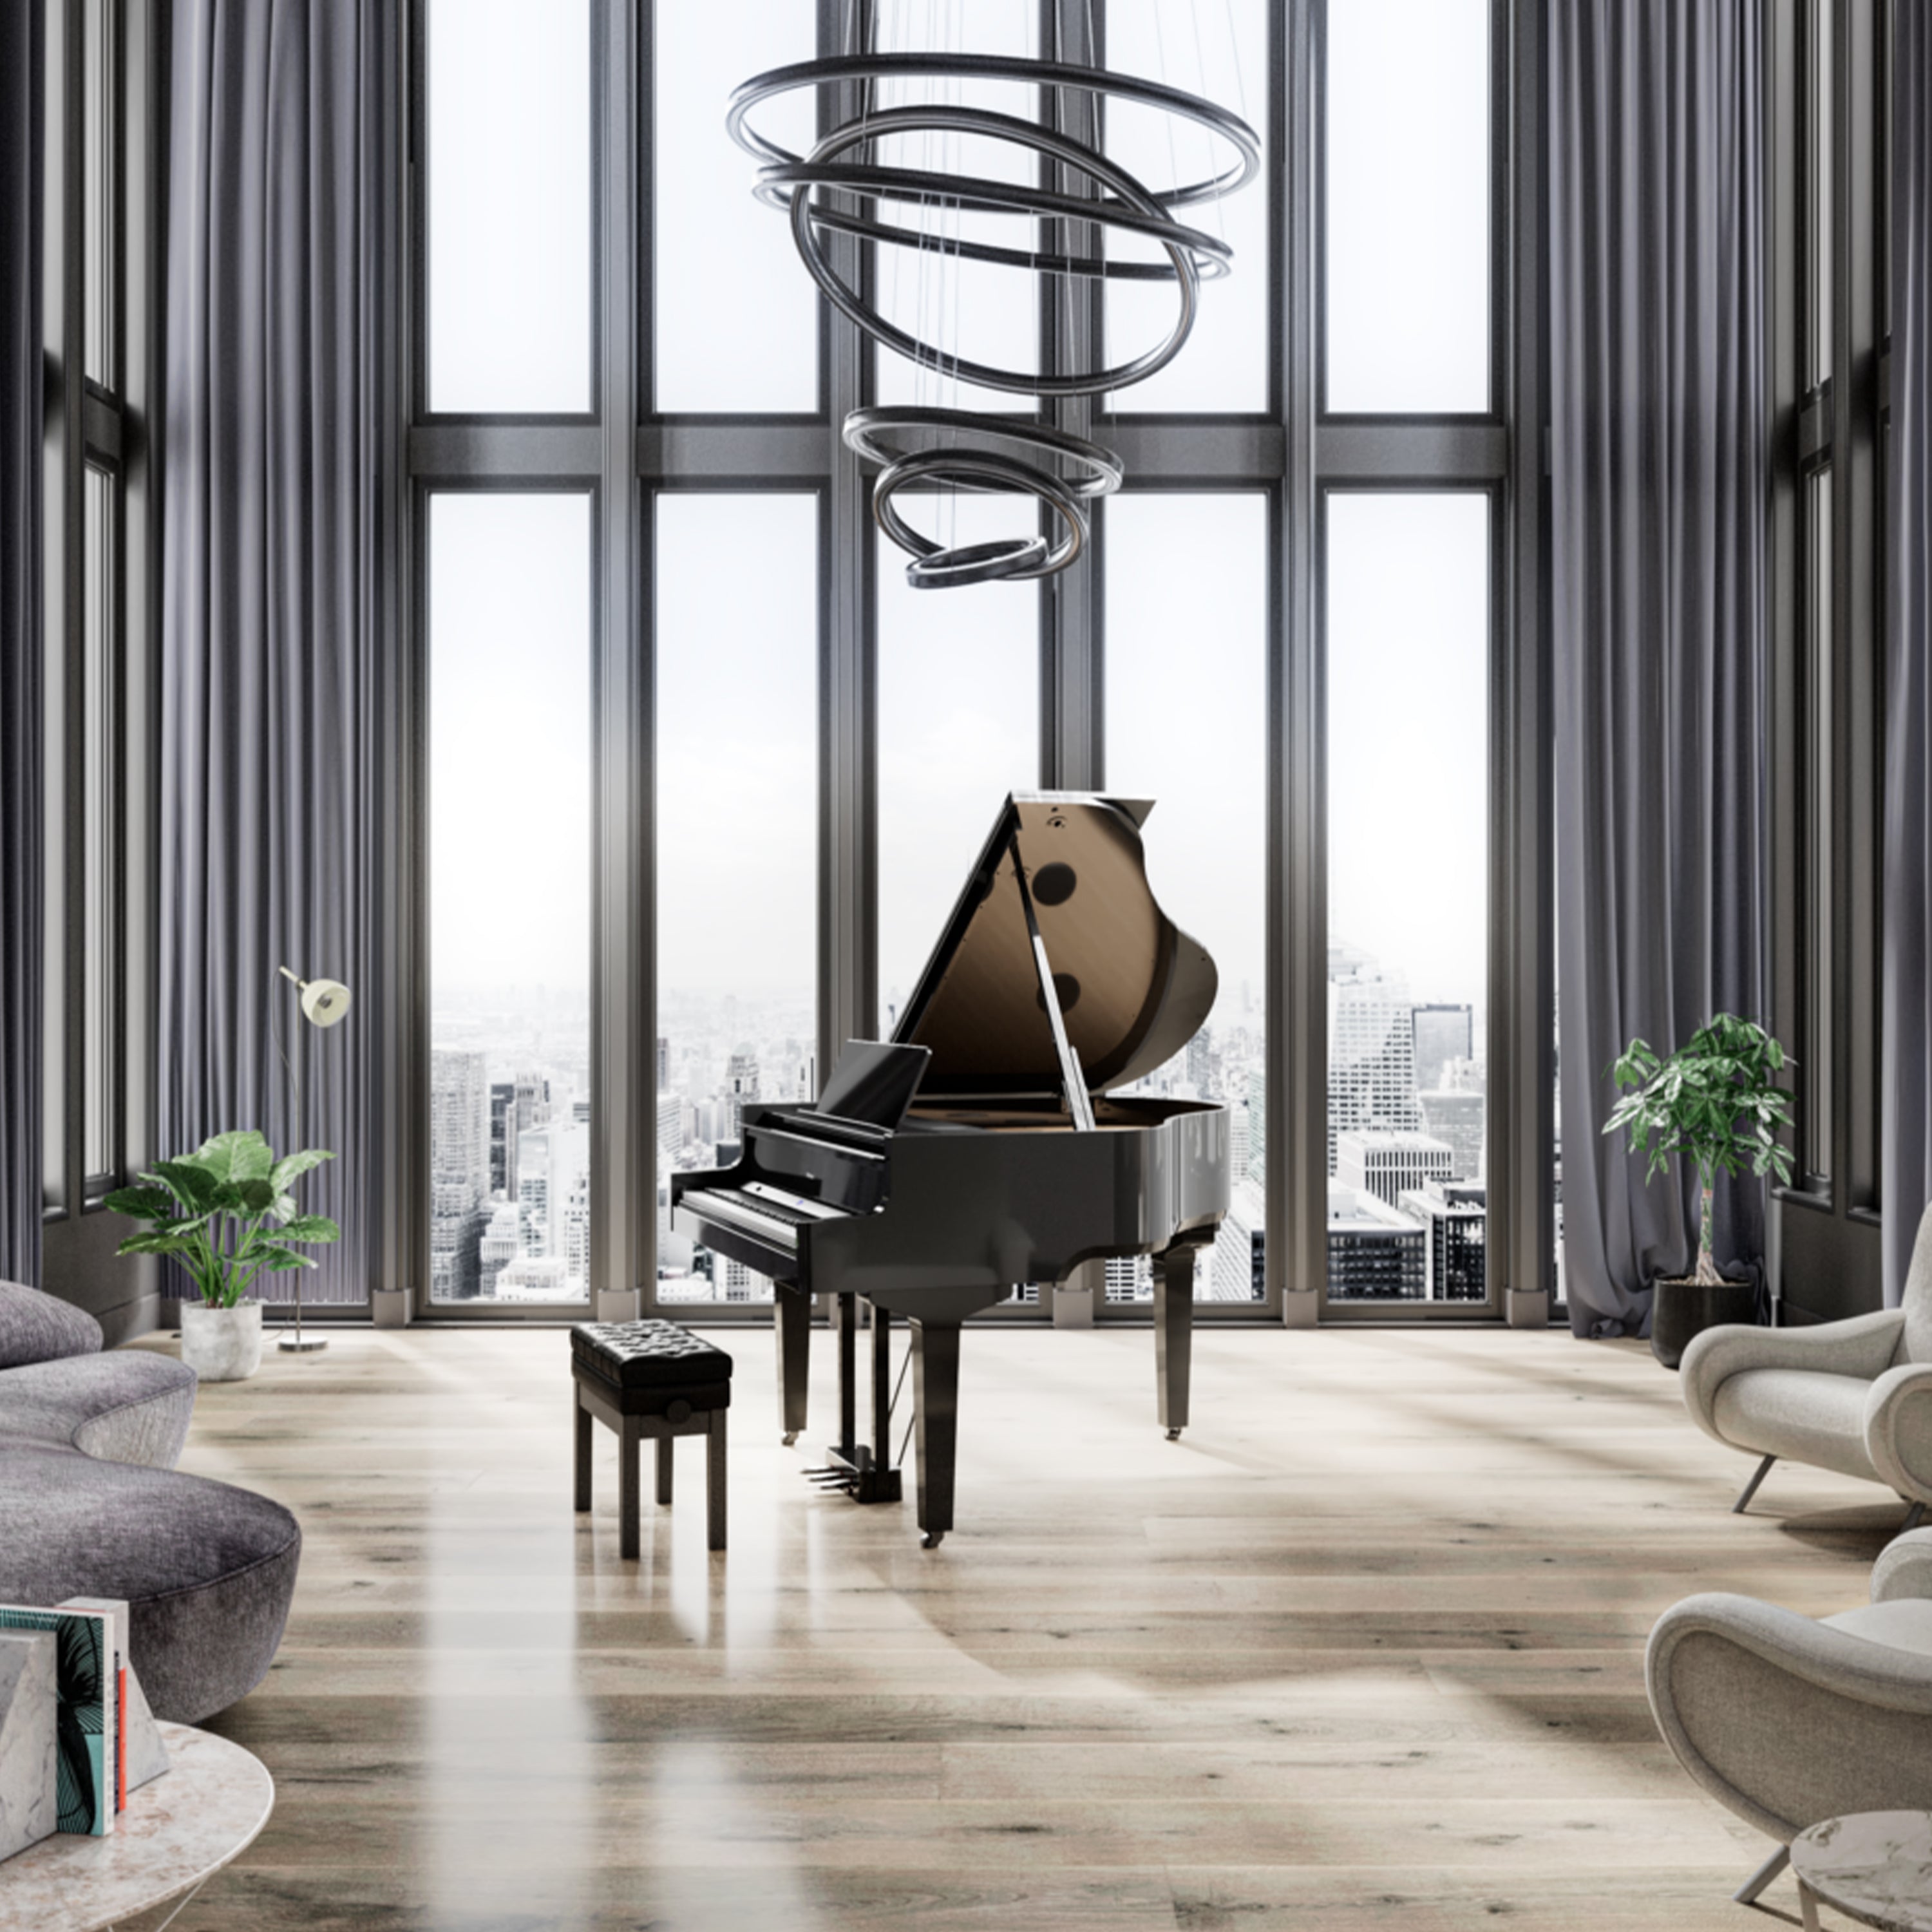 Roland GP-9 Digital Grand Piano - Polished Ebony - in a stylish living space